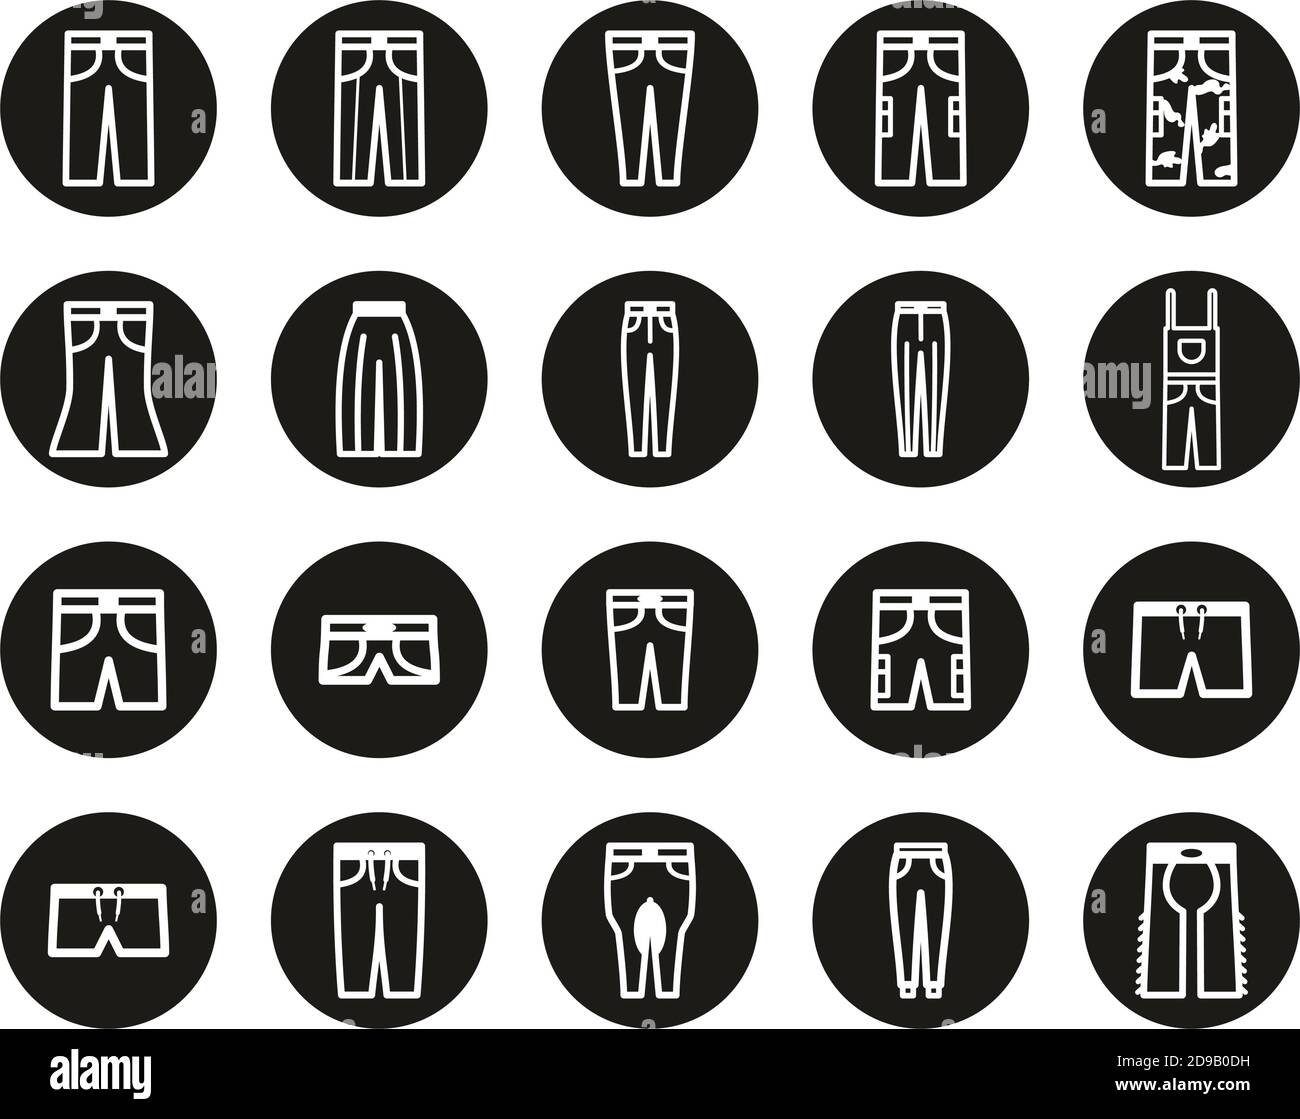 Pants Long & Short Icons White On Black Flat Design Circle Set Big Stock Vector